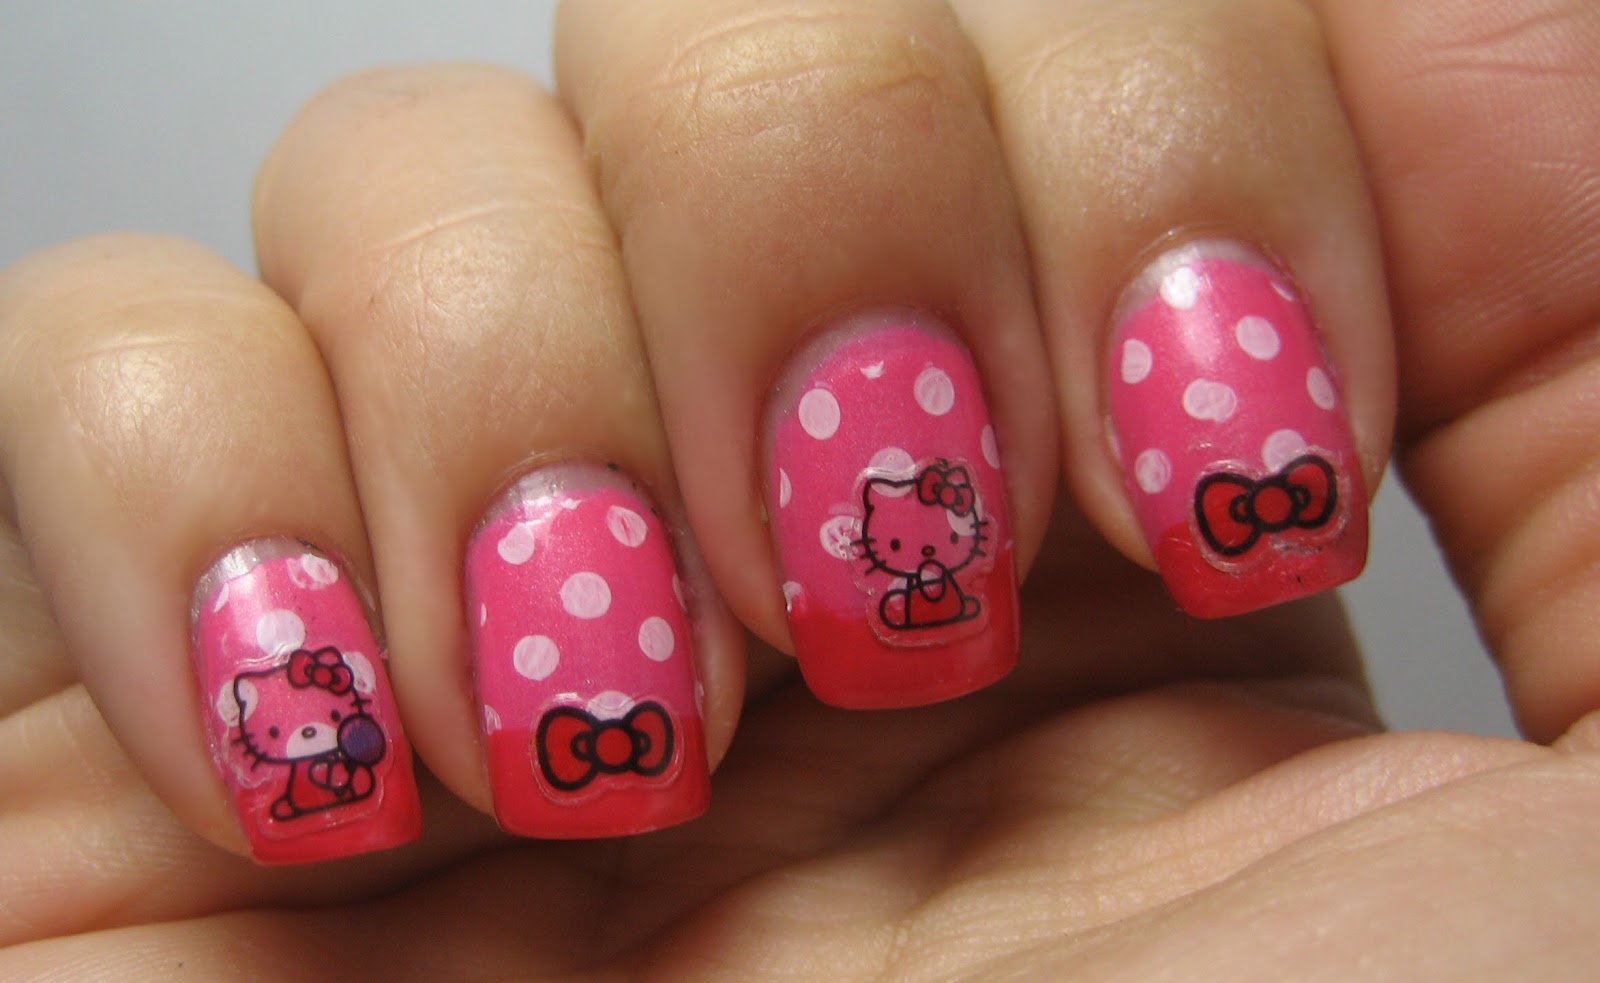 Cute Hello Kitty Nail Art on Tumblr - wide 4